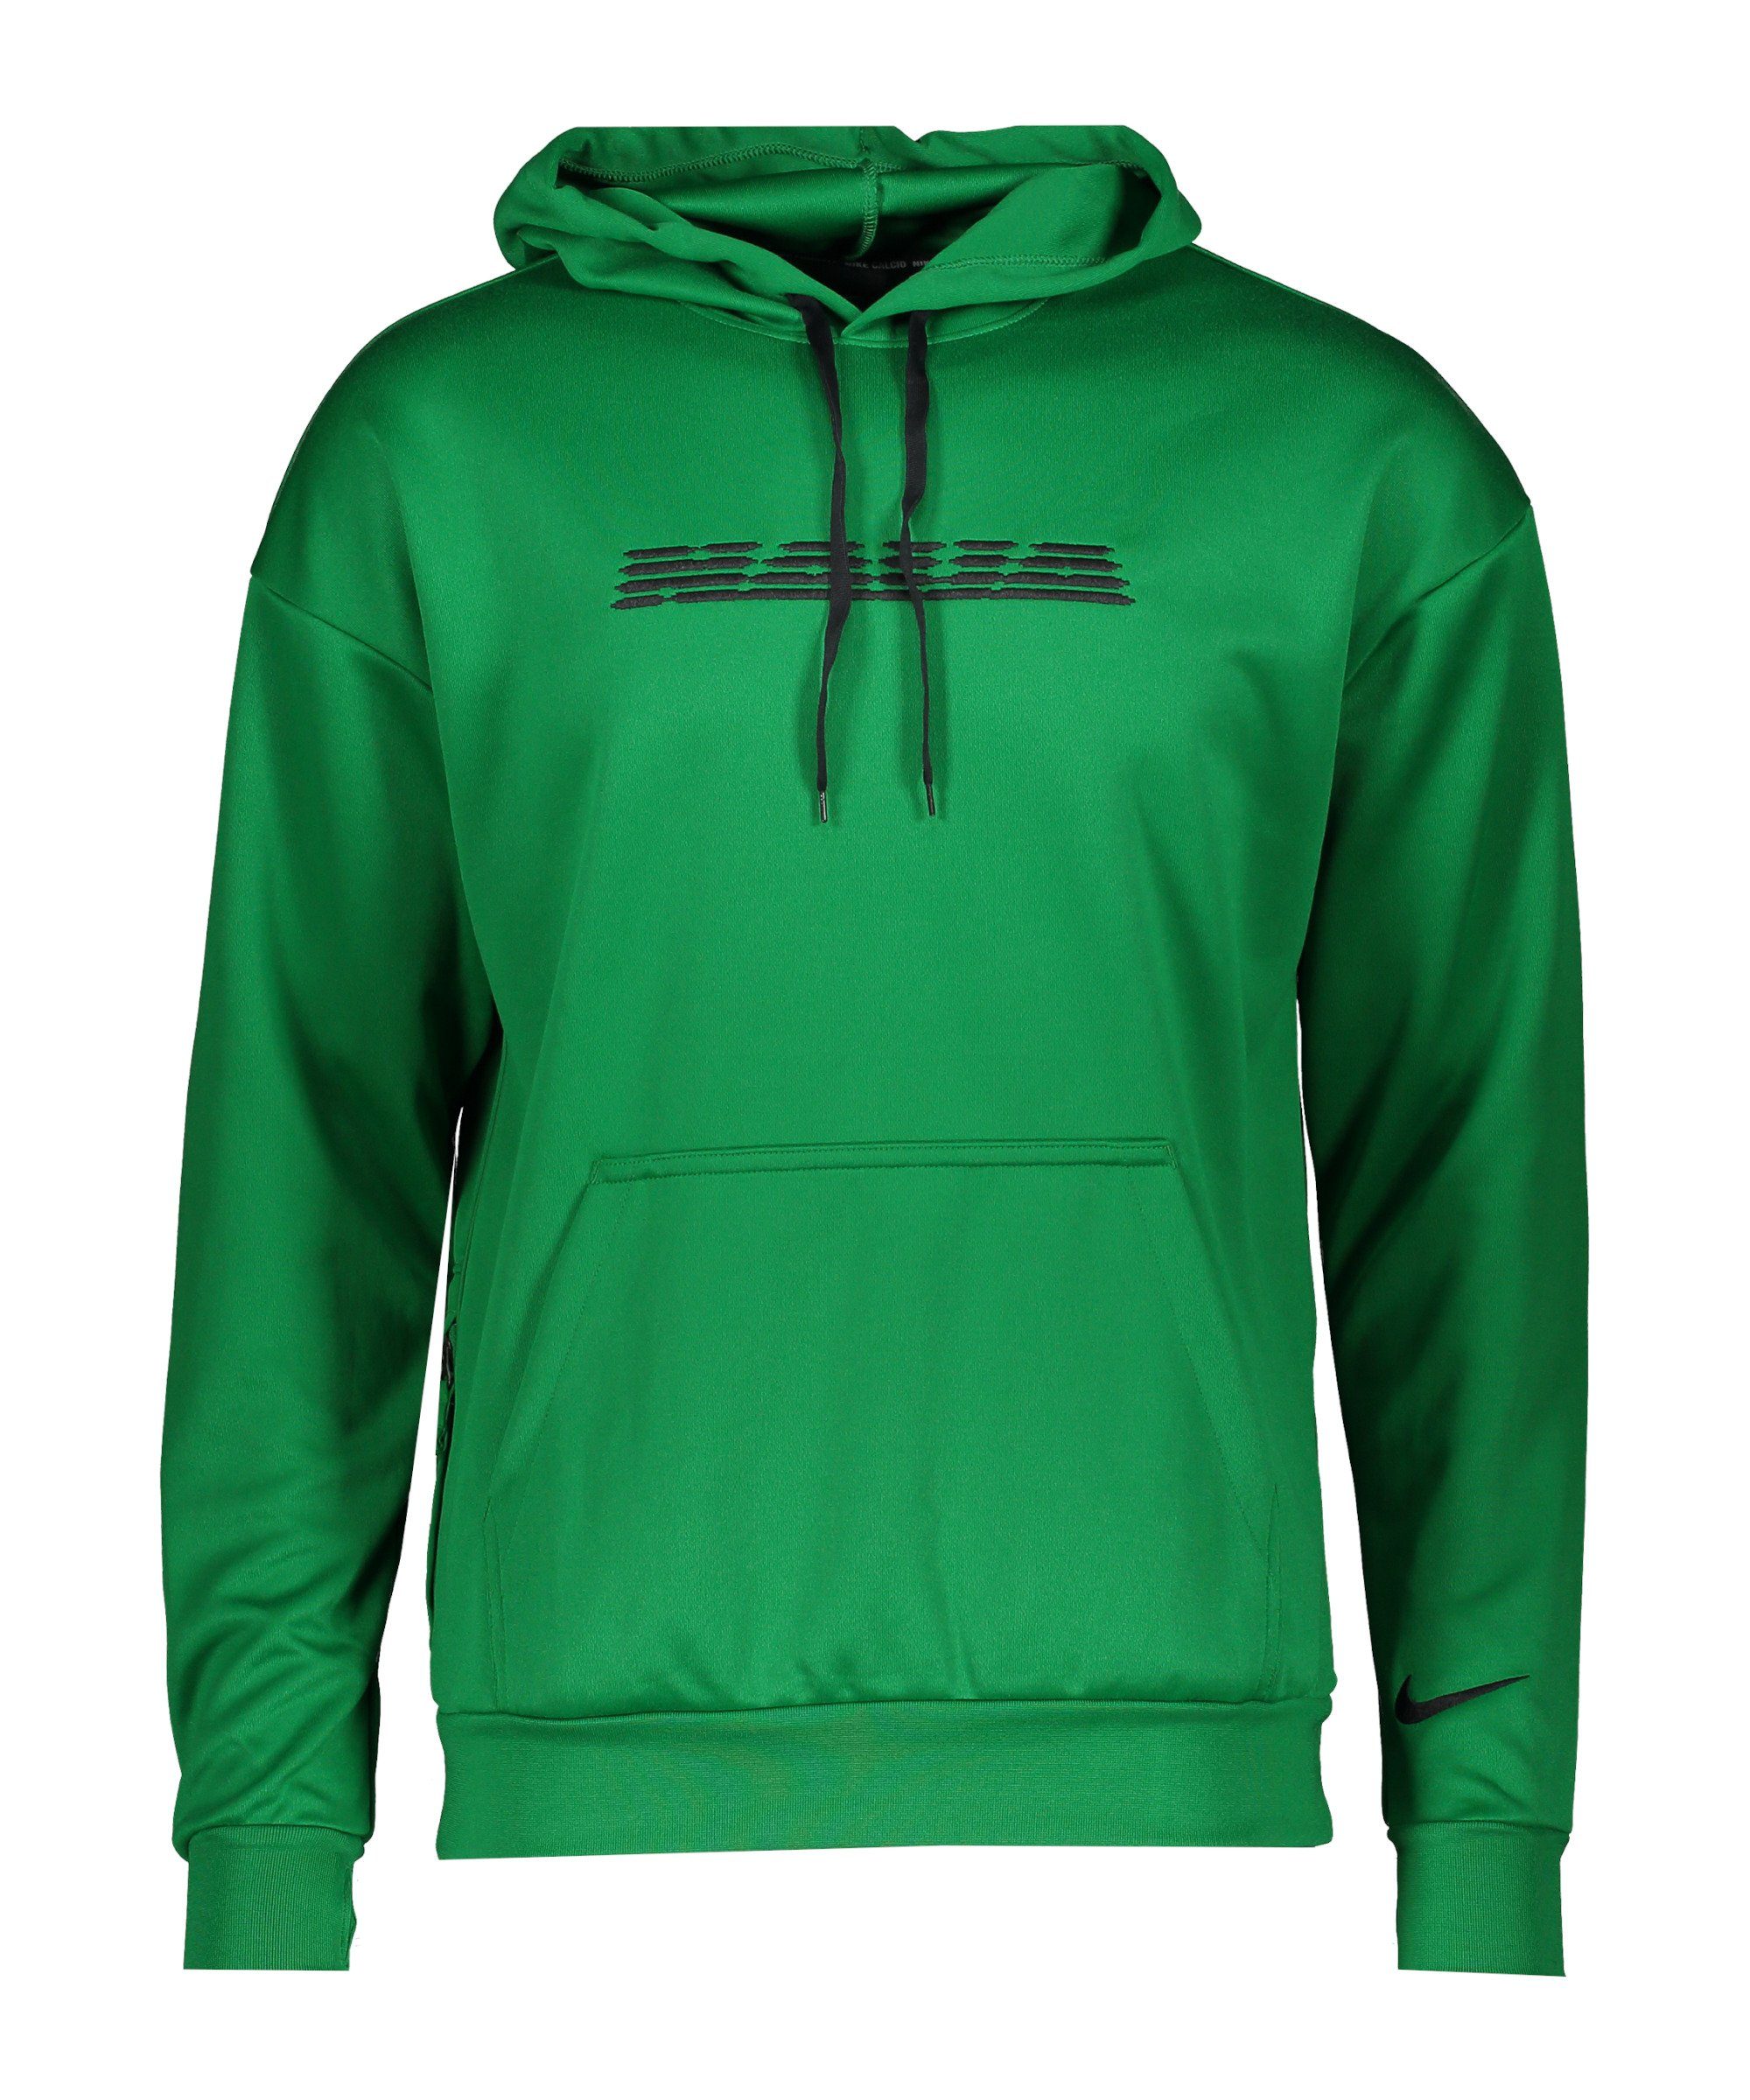 Nike Sportswear Sweatshirt Nigeria "Naija" Hoody